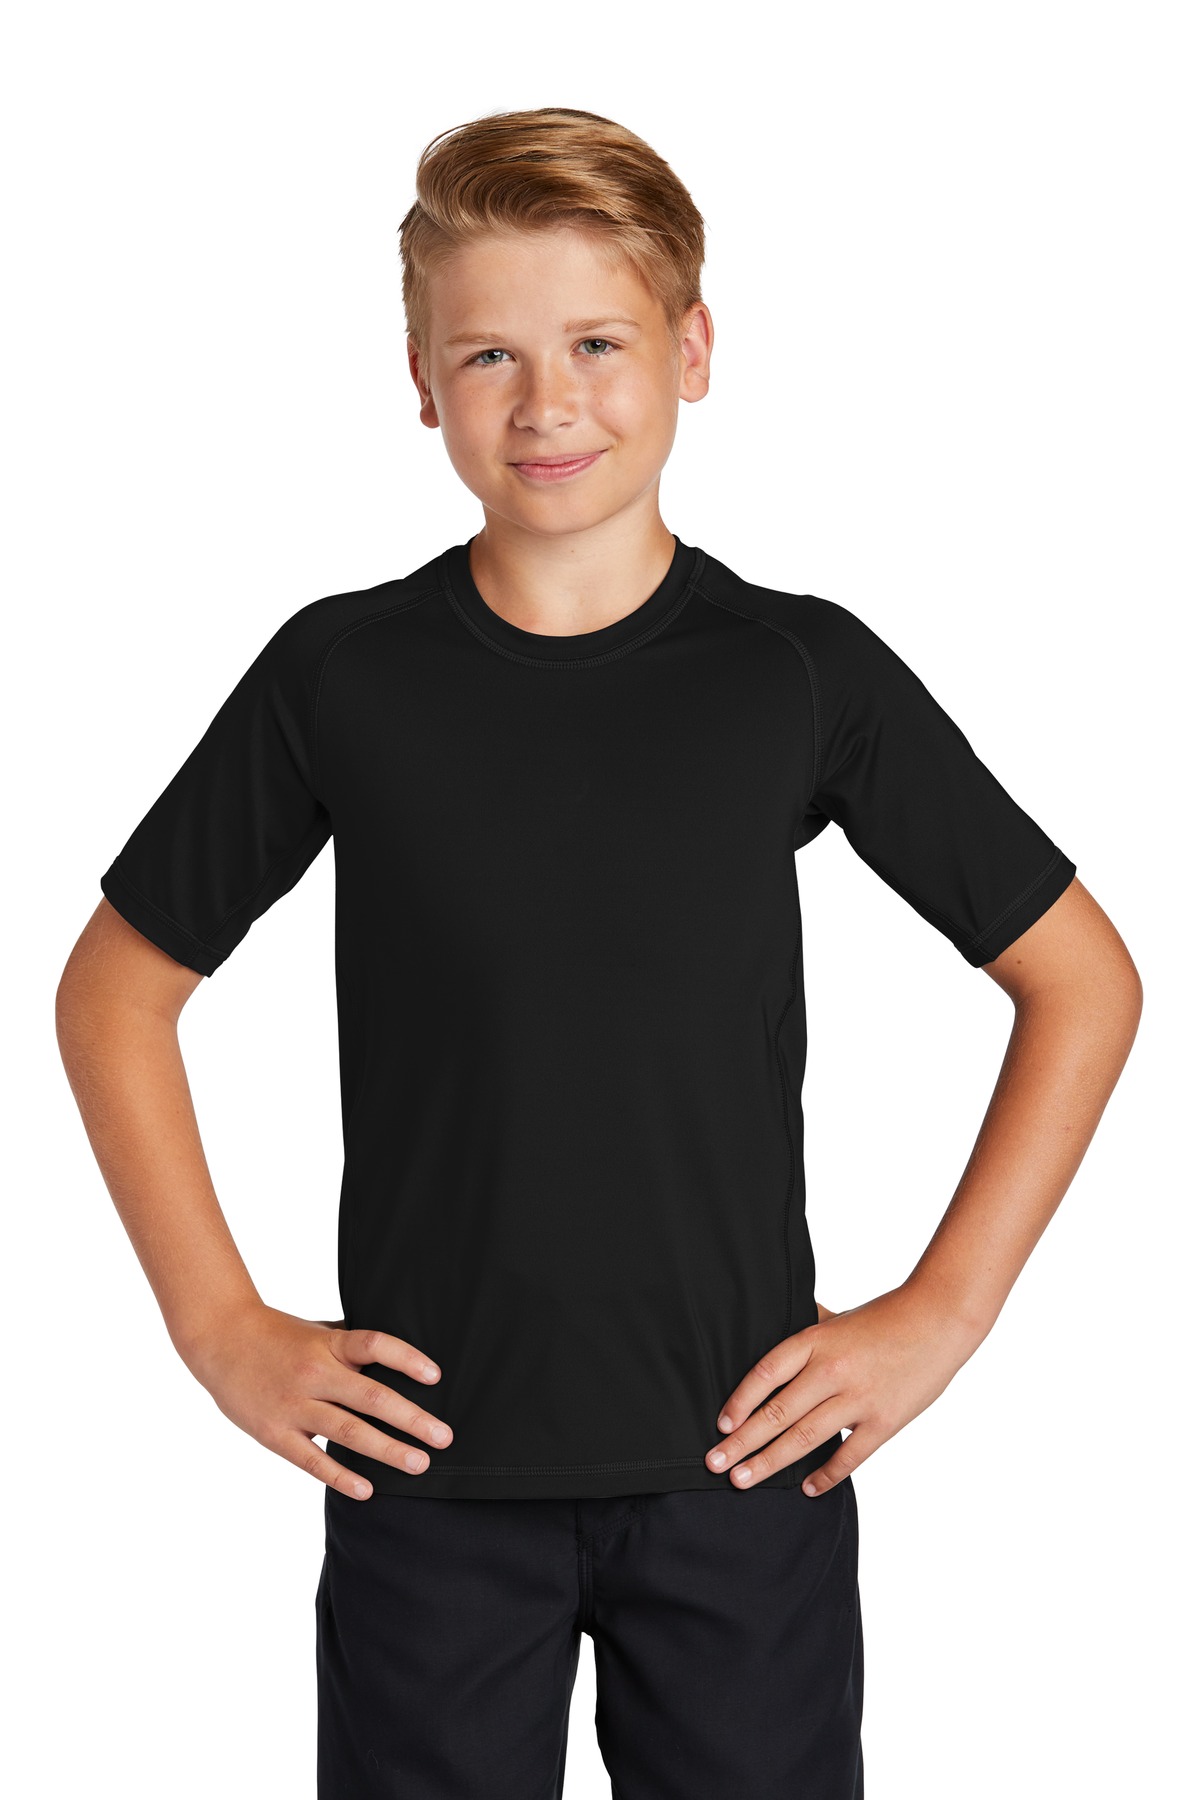 Sport-Tek Youth Rashguard T-Shirt - YST470